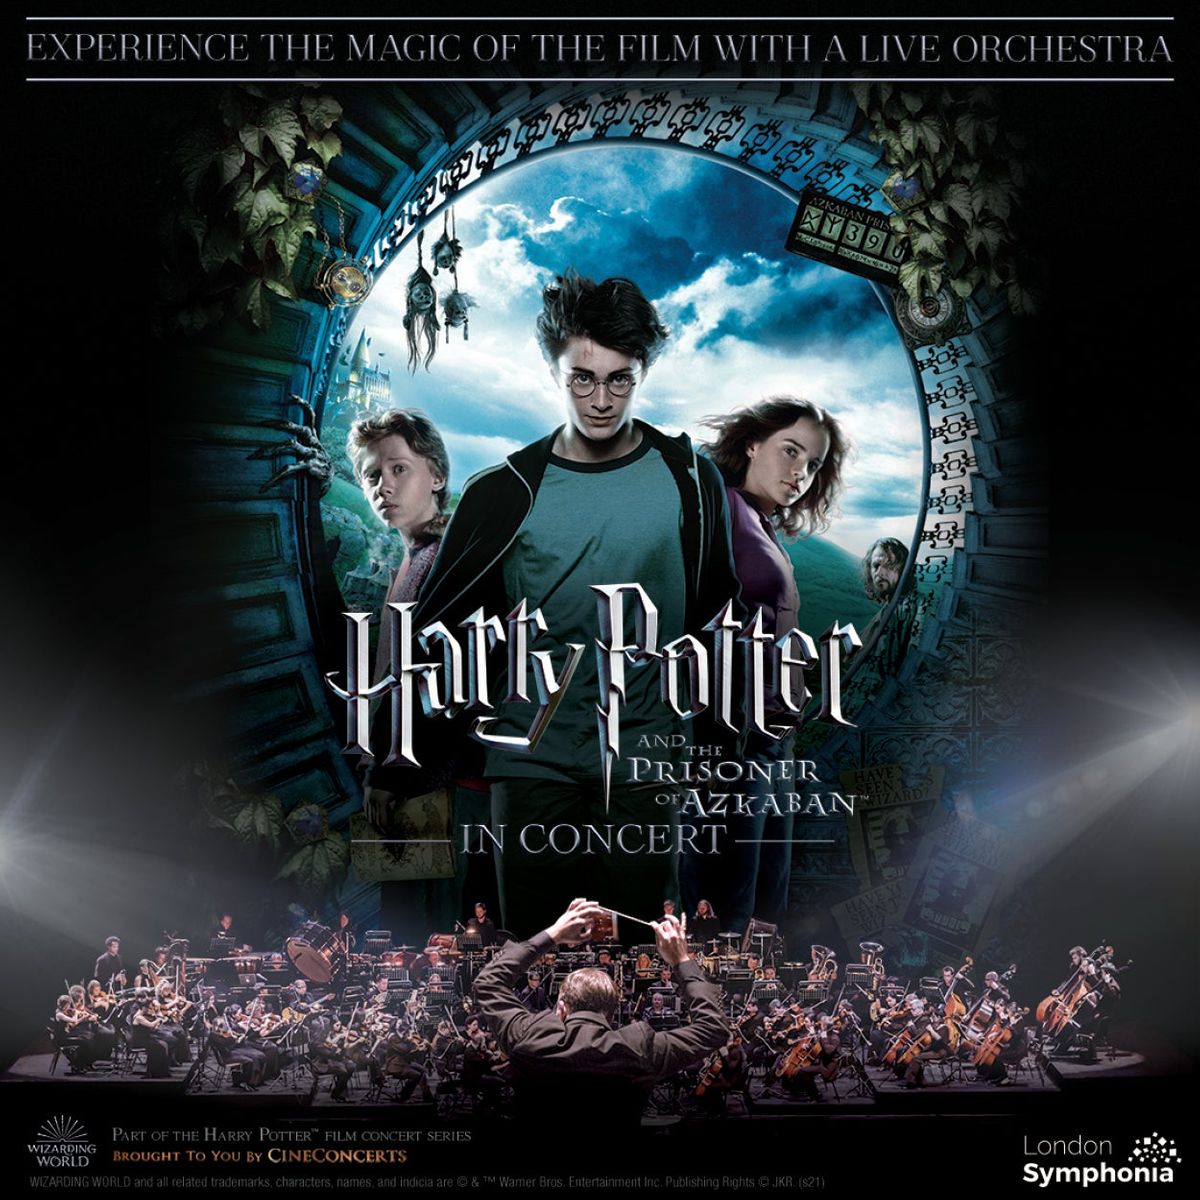 Harry Potter and the Prisoner of Azkaban - In Concert (Concert)